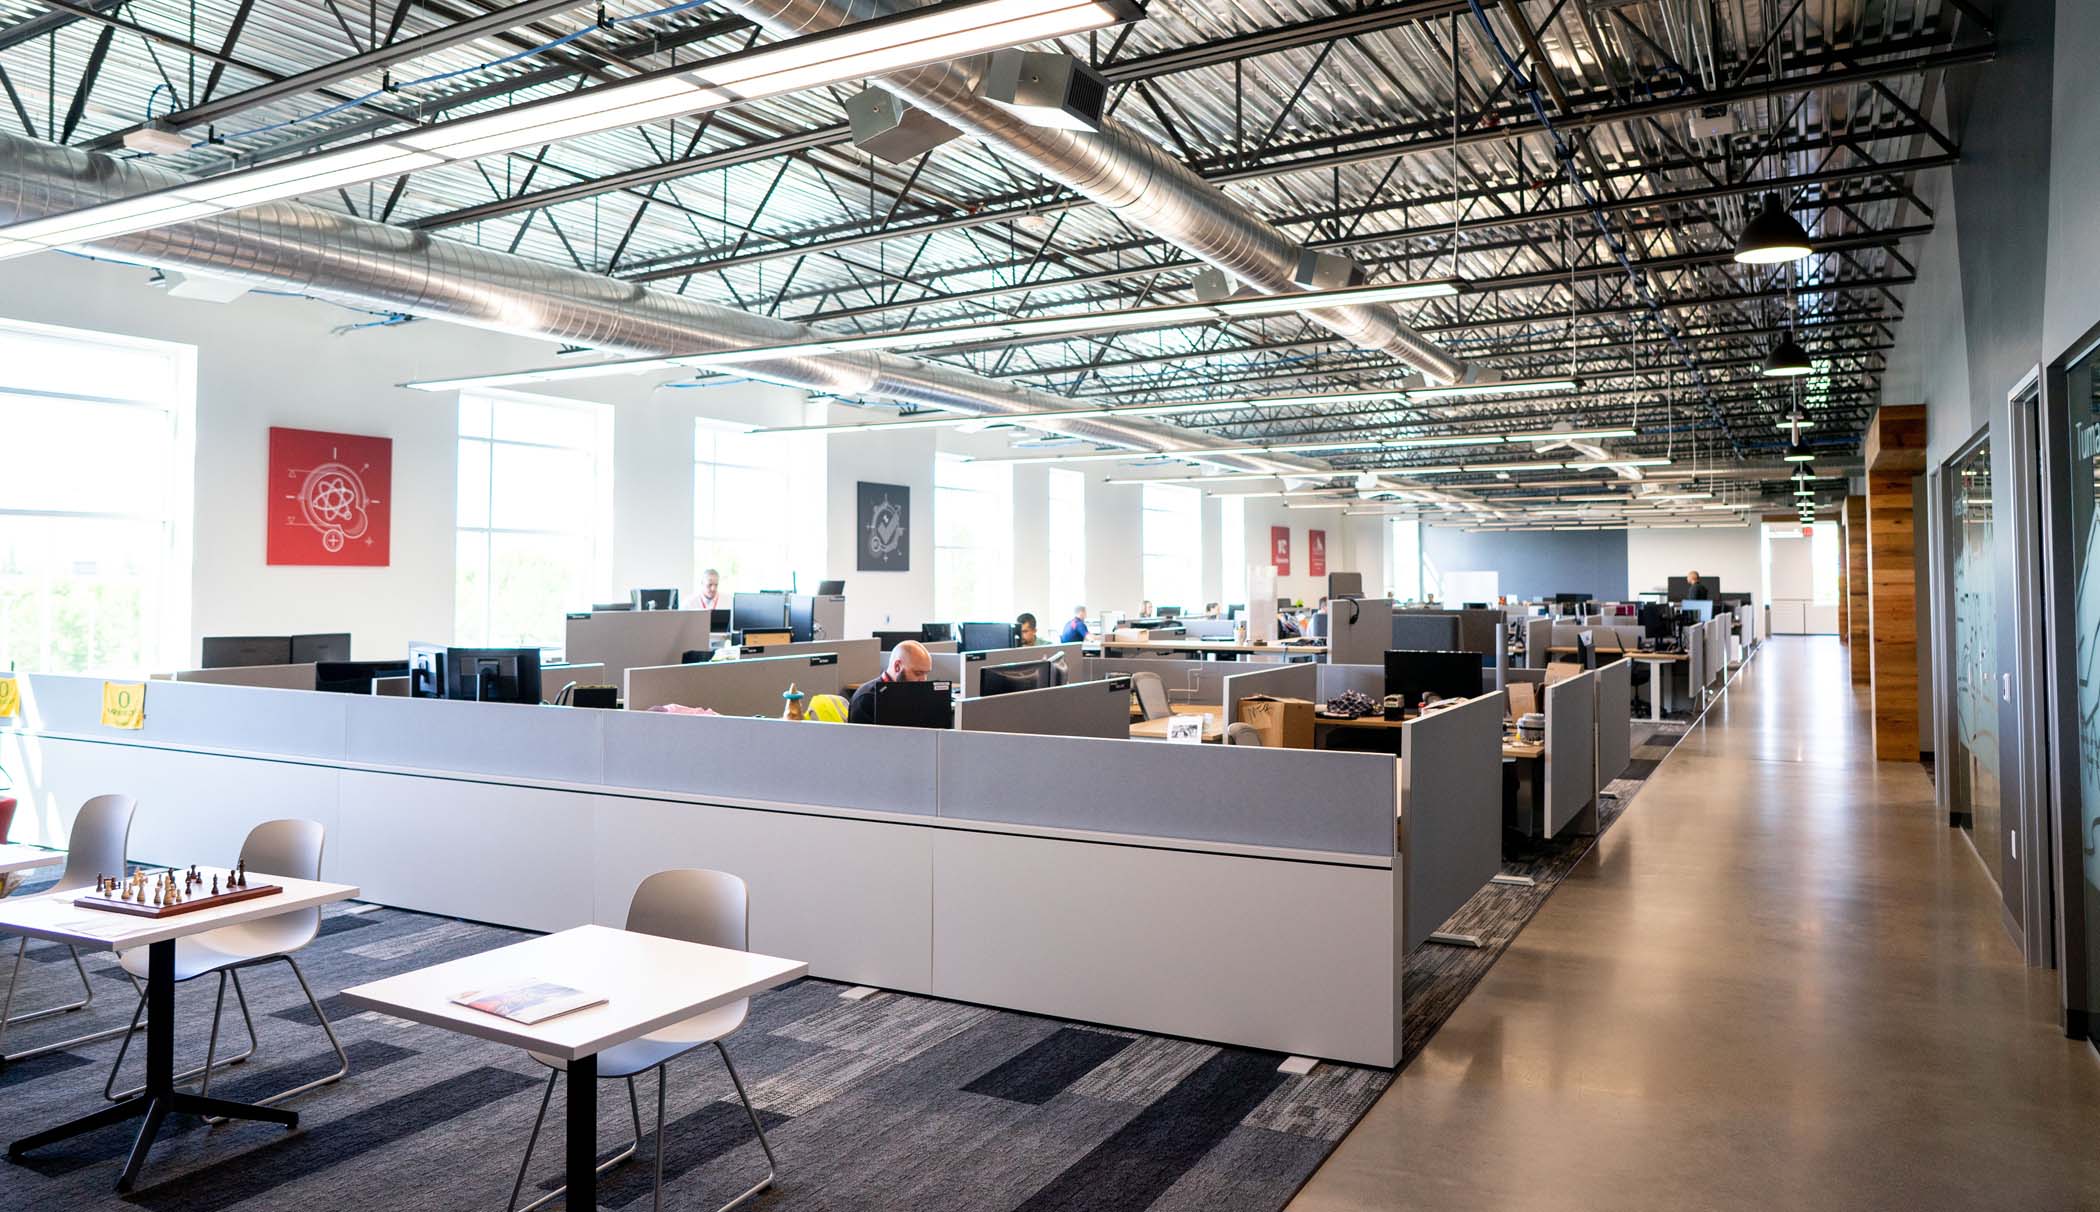 High tech, empty office space